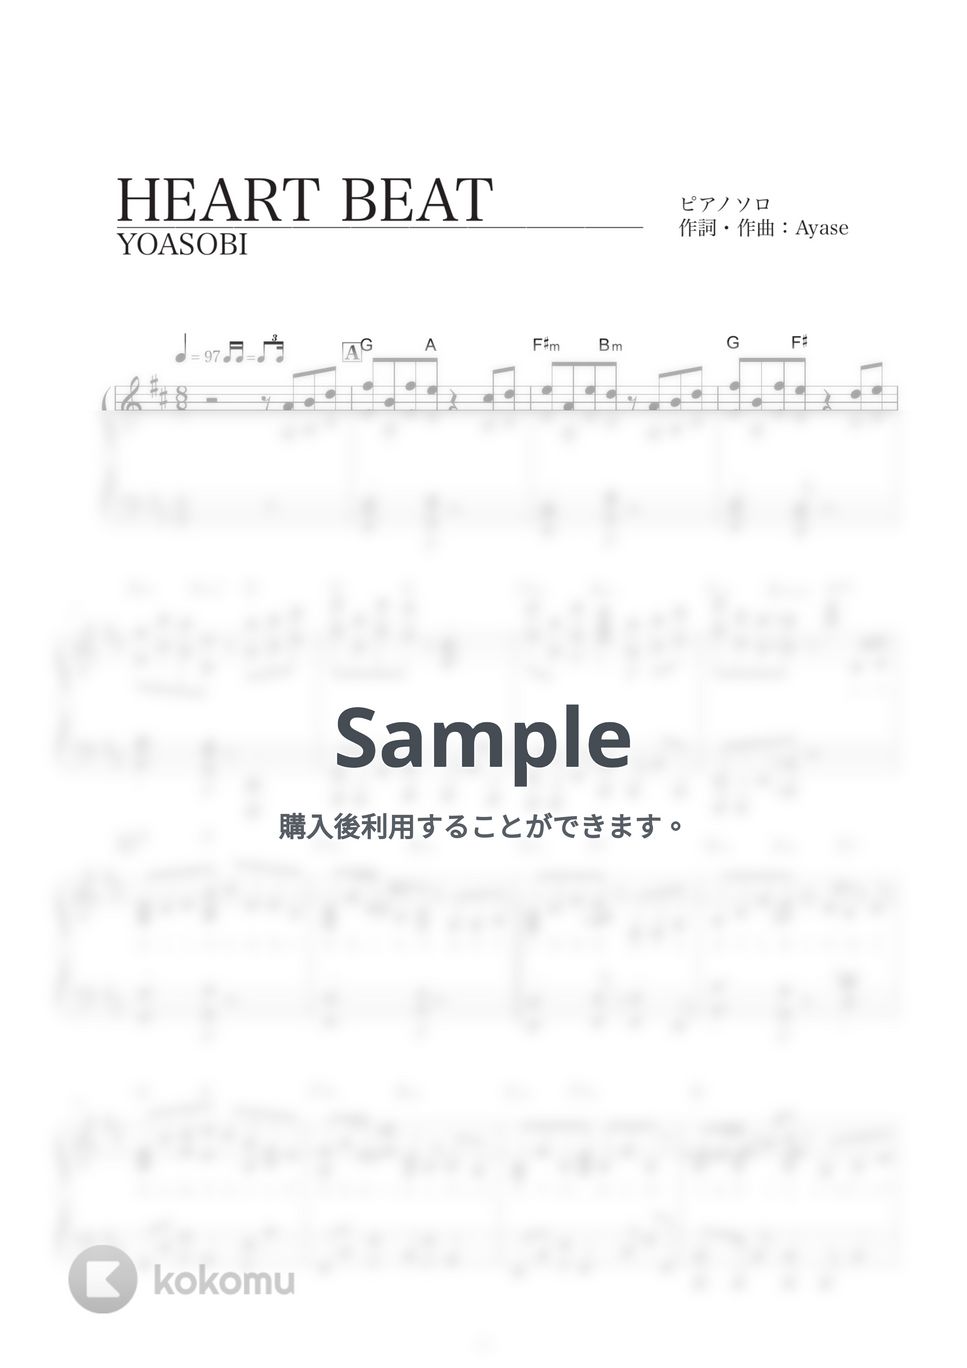 YOASOBI - HEART BEAT by HARU KOBA